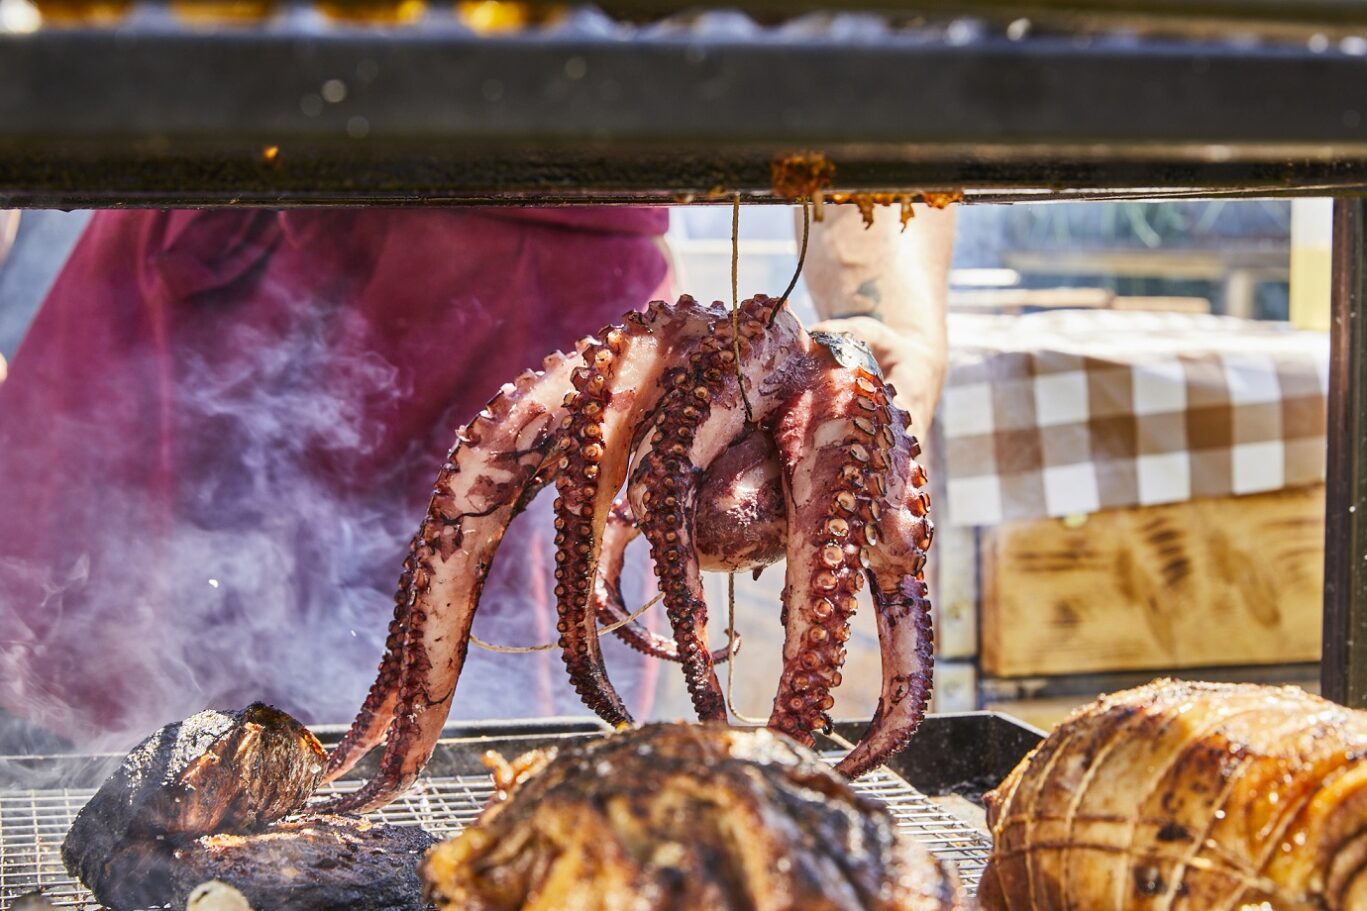 Octopus BBQ